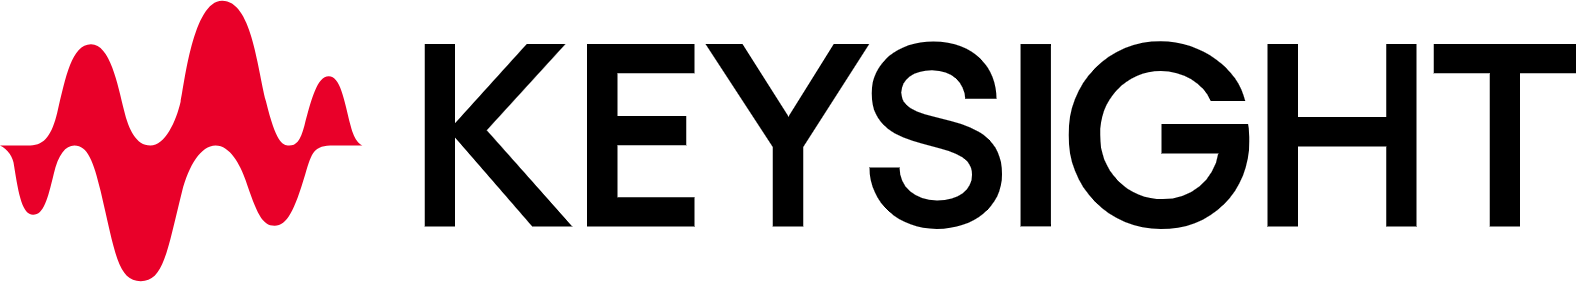 Keysight logo large (transparent PNG)